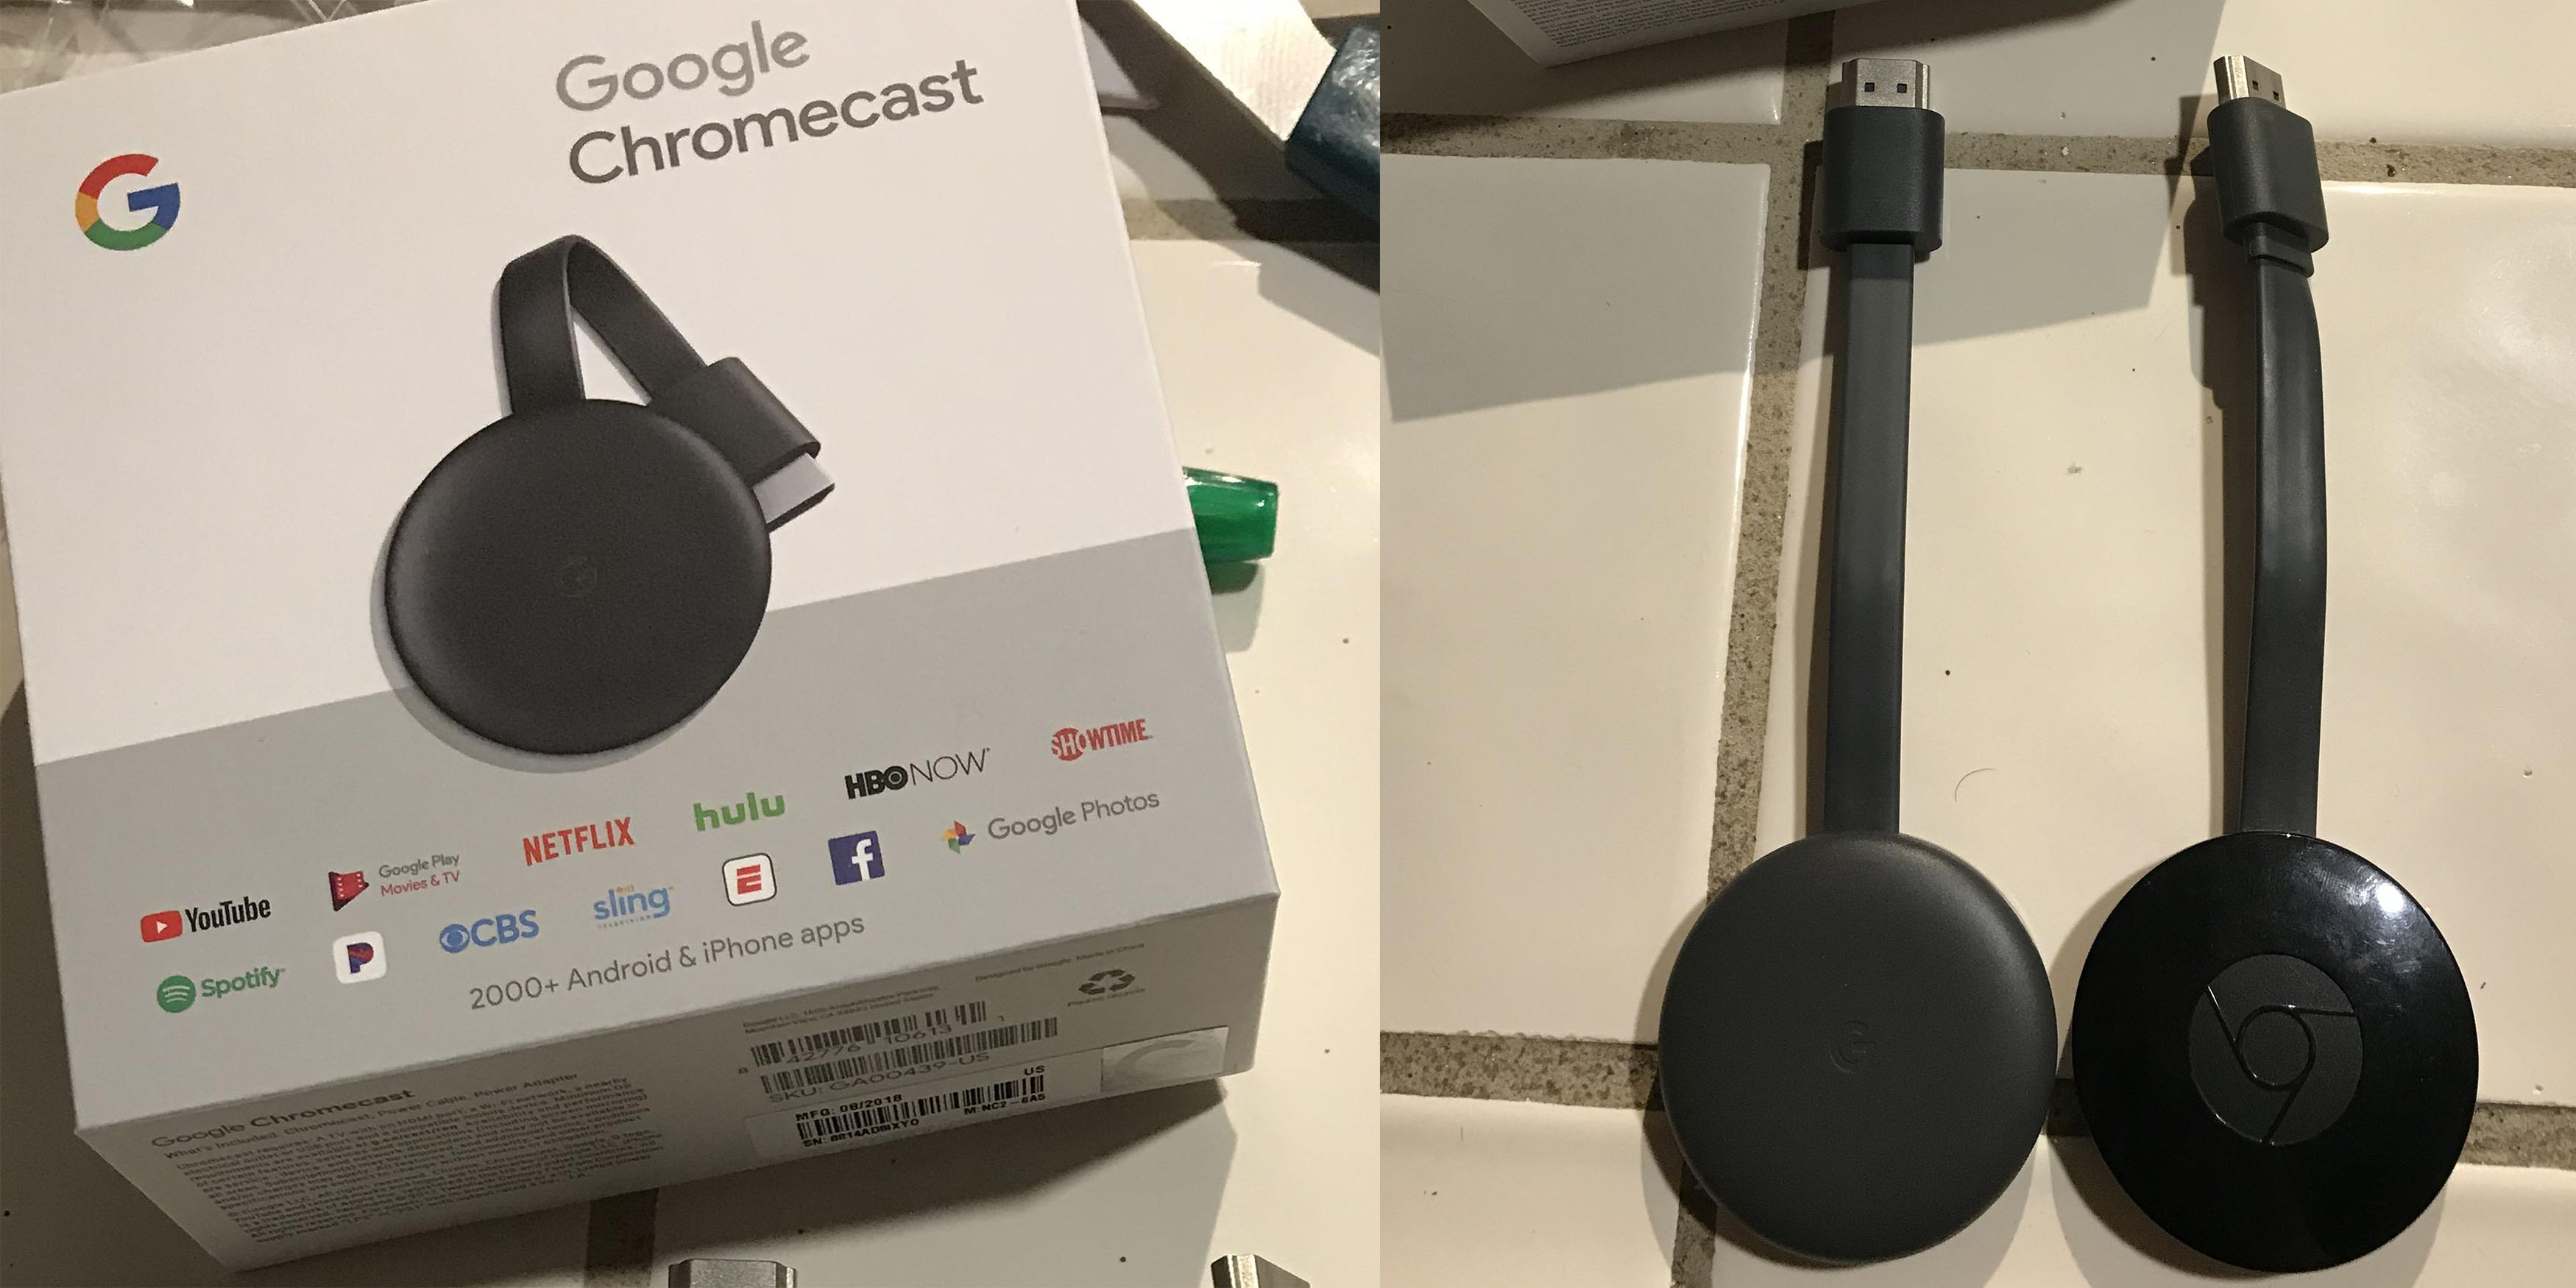 Milestone Vågn op Rust 3rd-generation Chromecast leaks ahead of Google's launch - 9to5Google